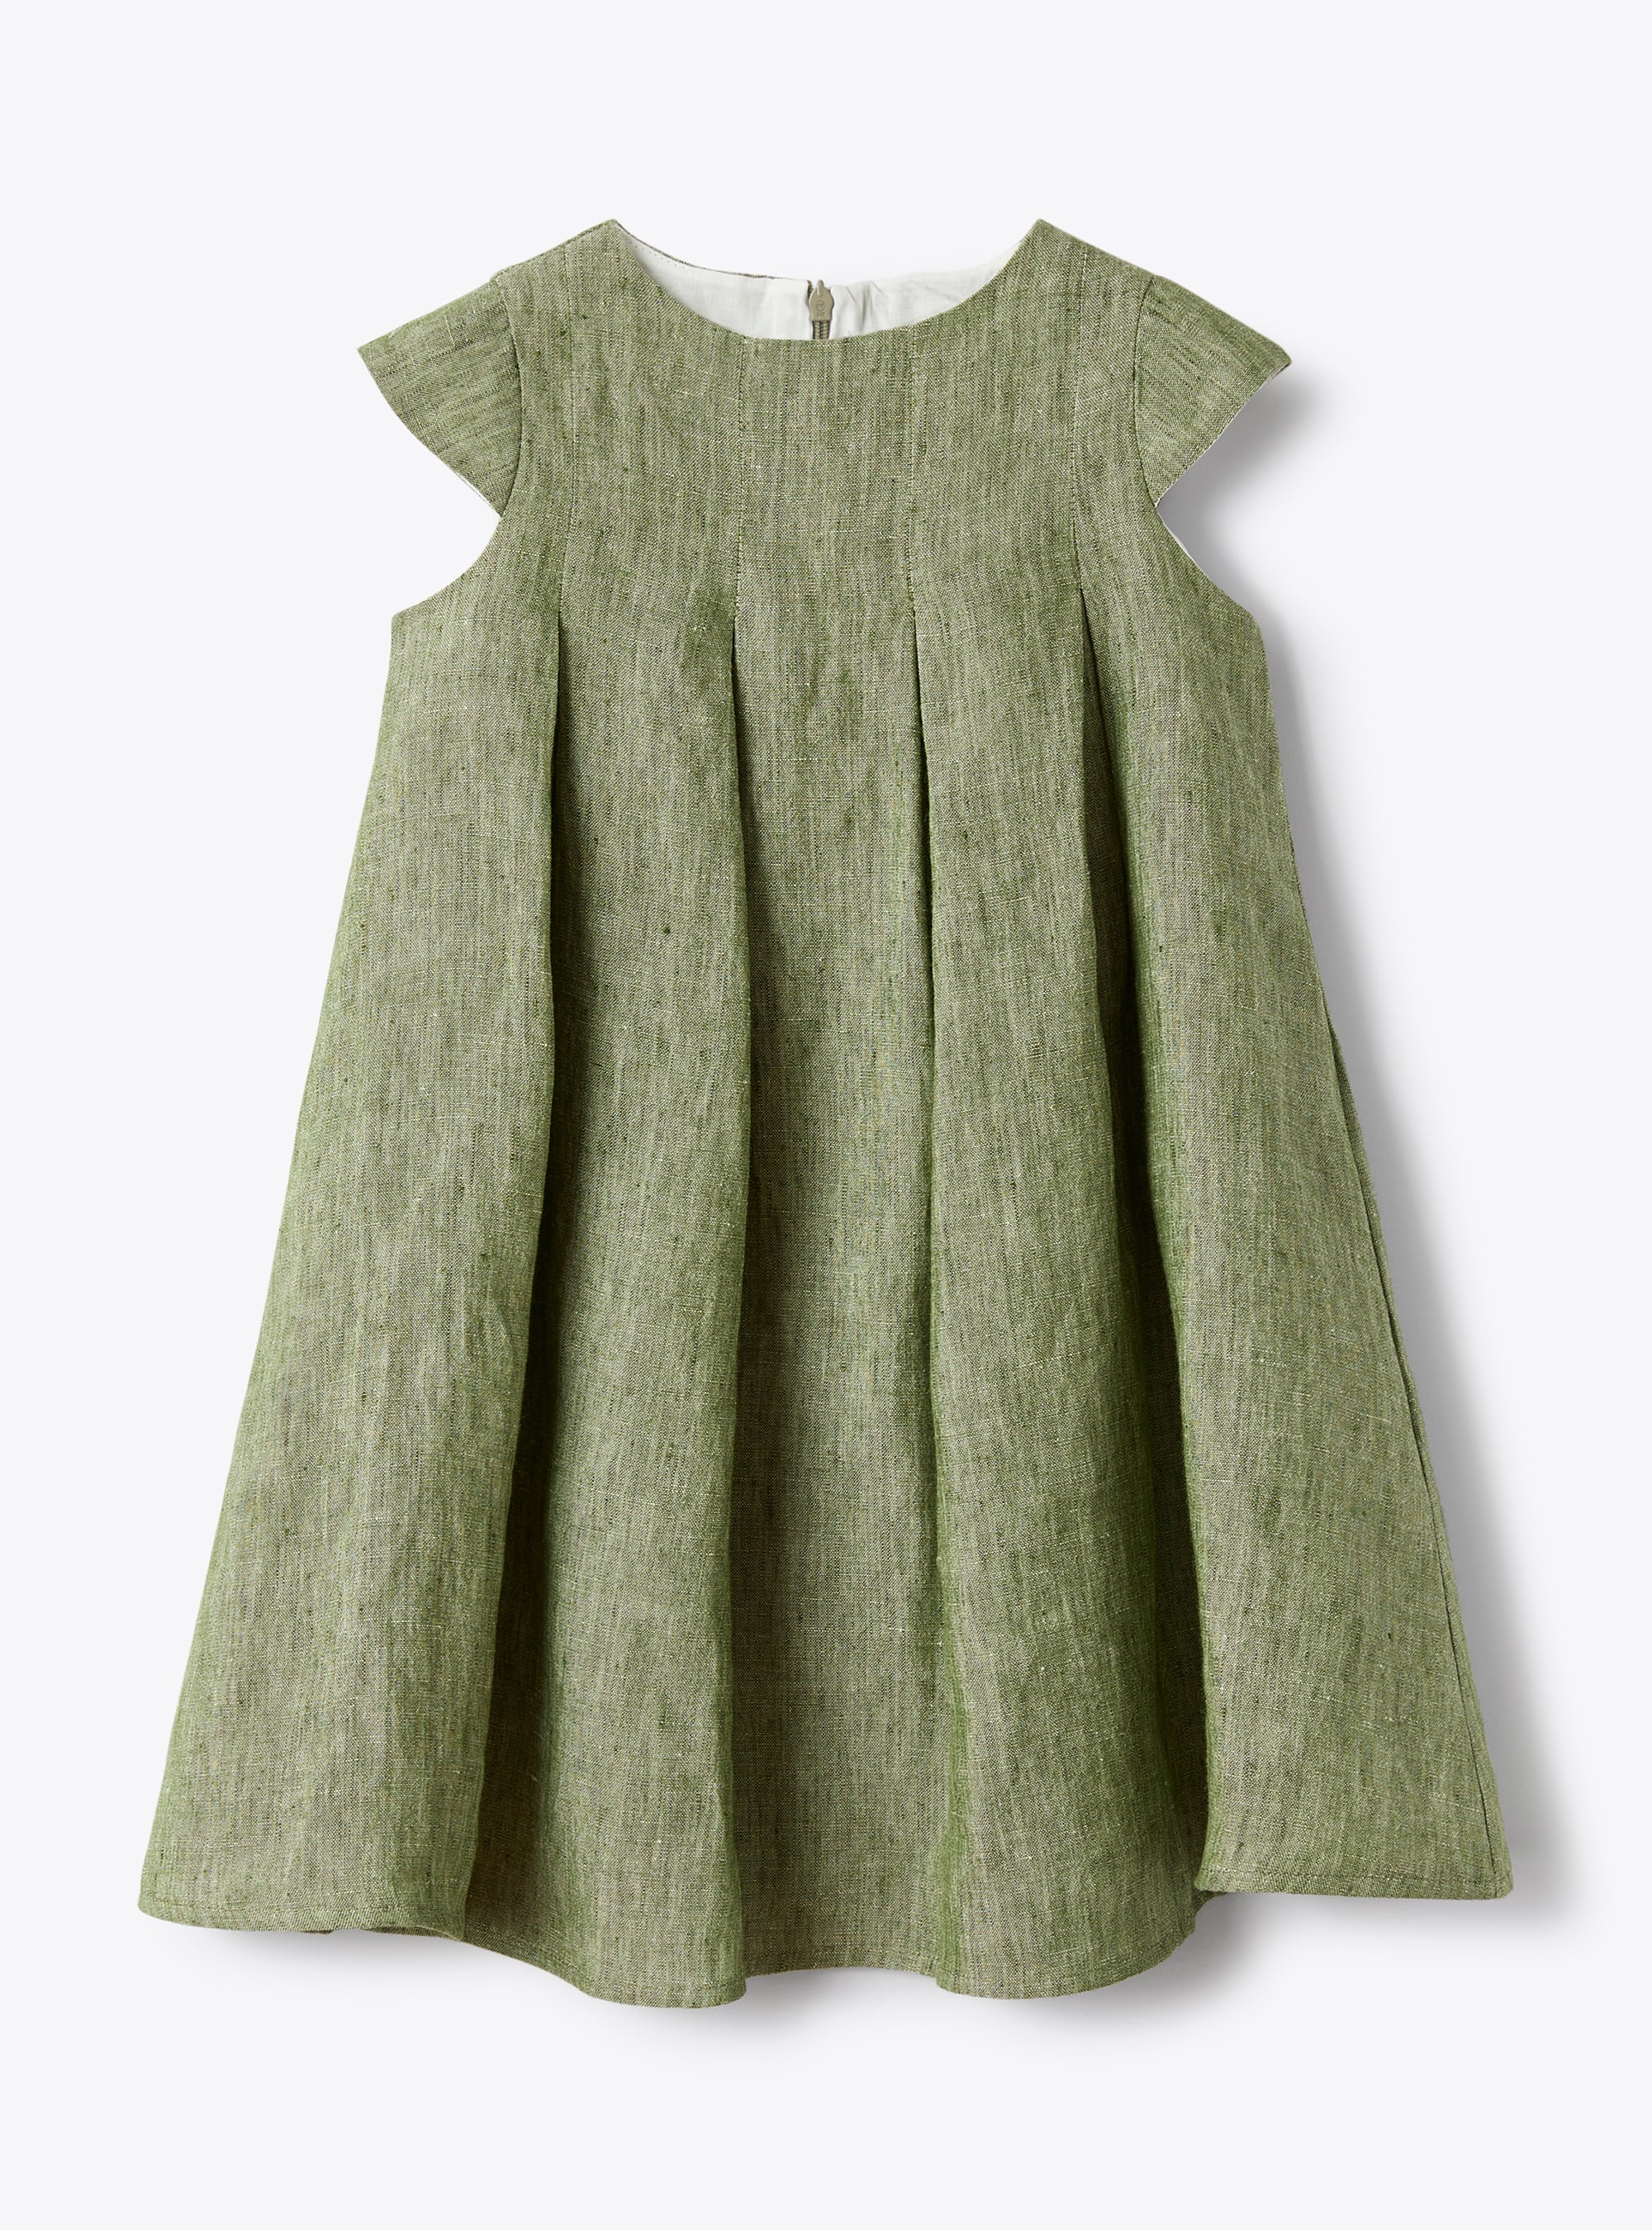 Dress in sage-green linen - Green | Il Gufo